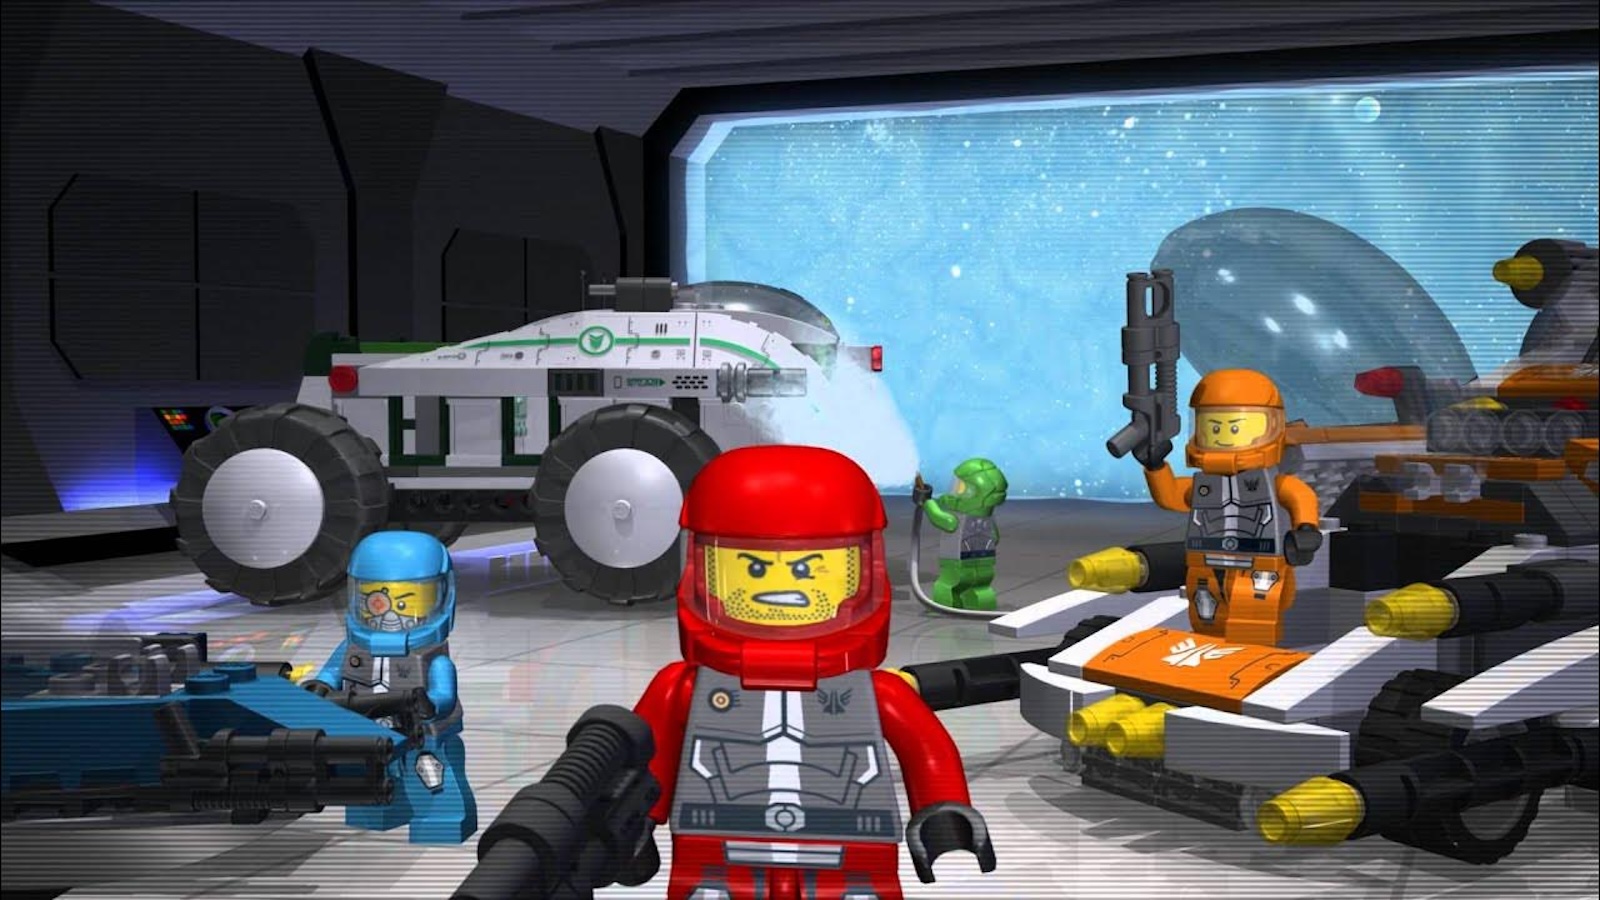 Legoland space coaster